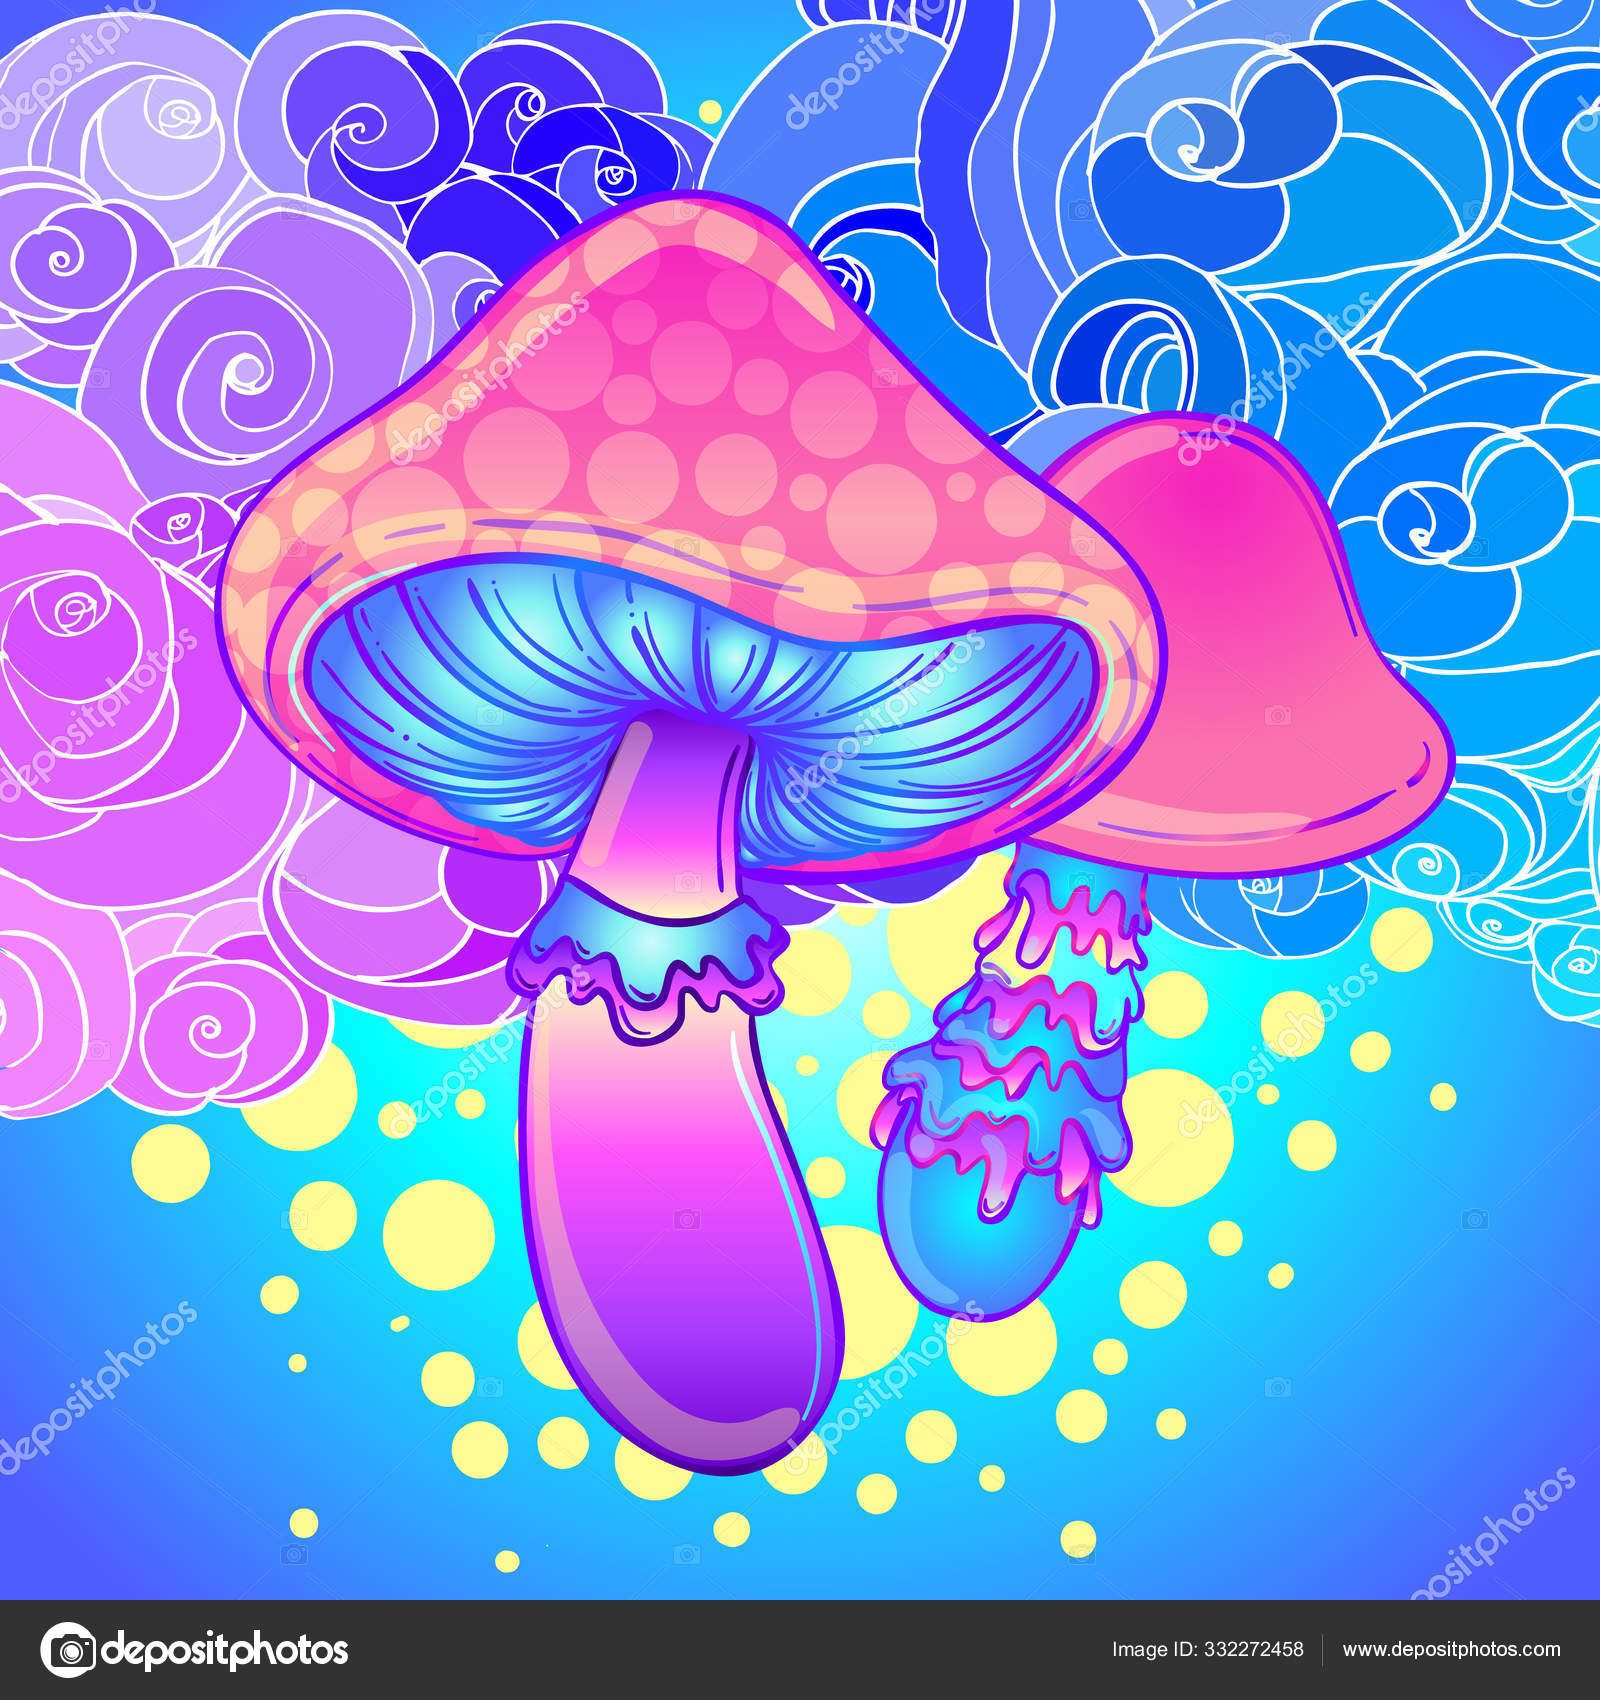 psilocybin mushrooms art